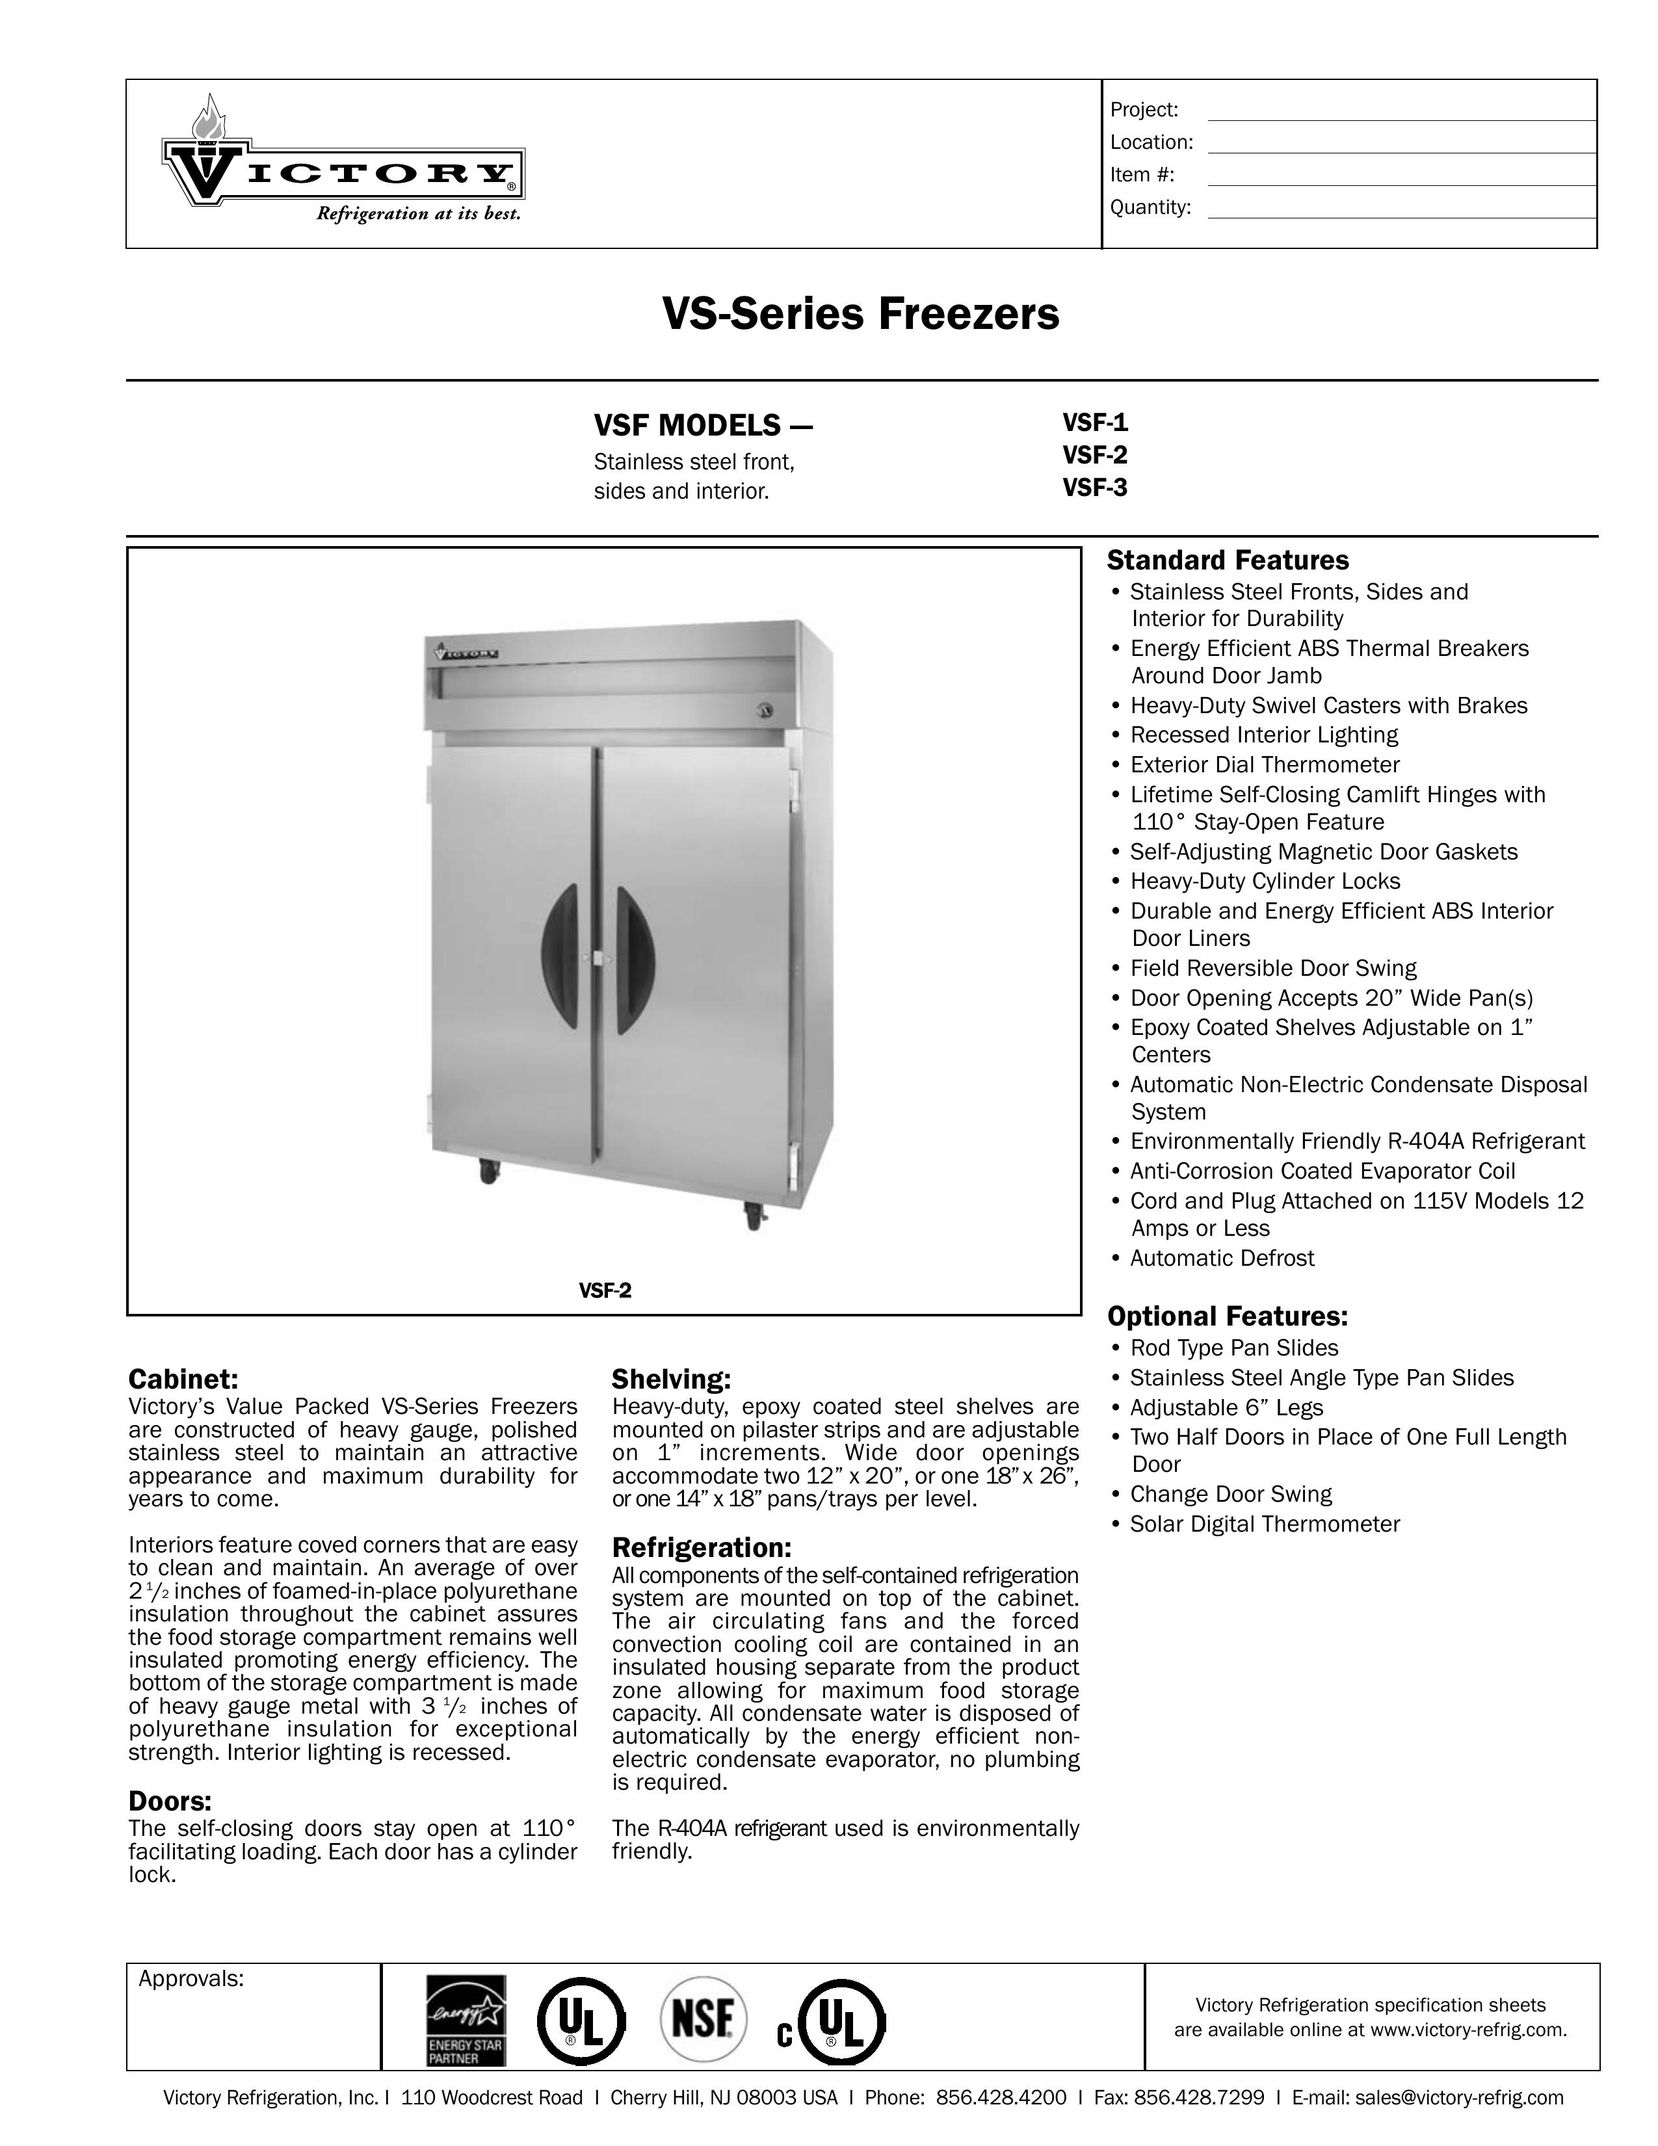 Victory Refrigeration VSF-3 Freezer User Manual